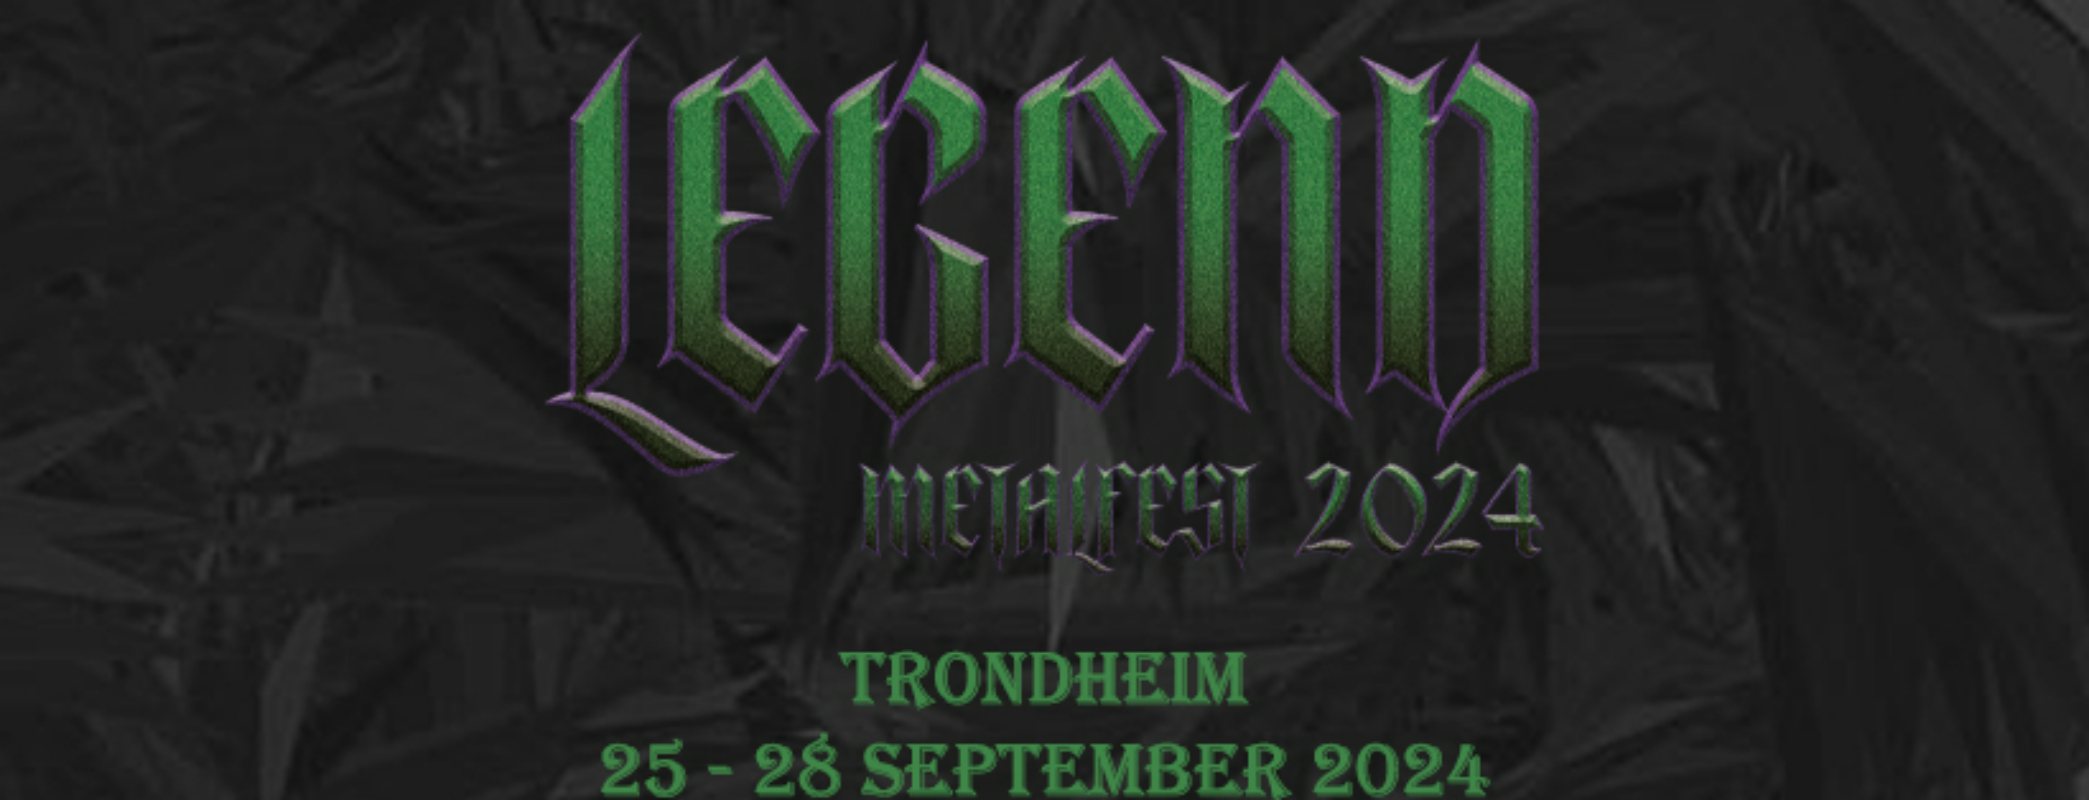 Legend Metalfest 2024